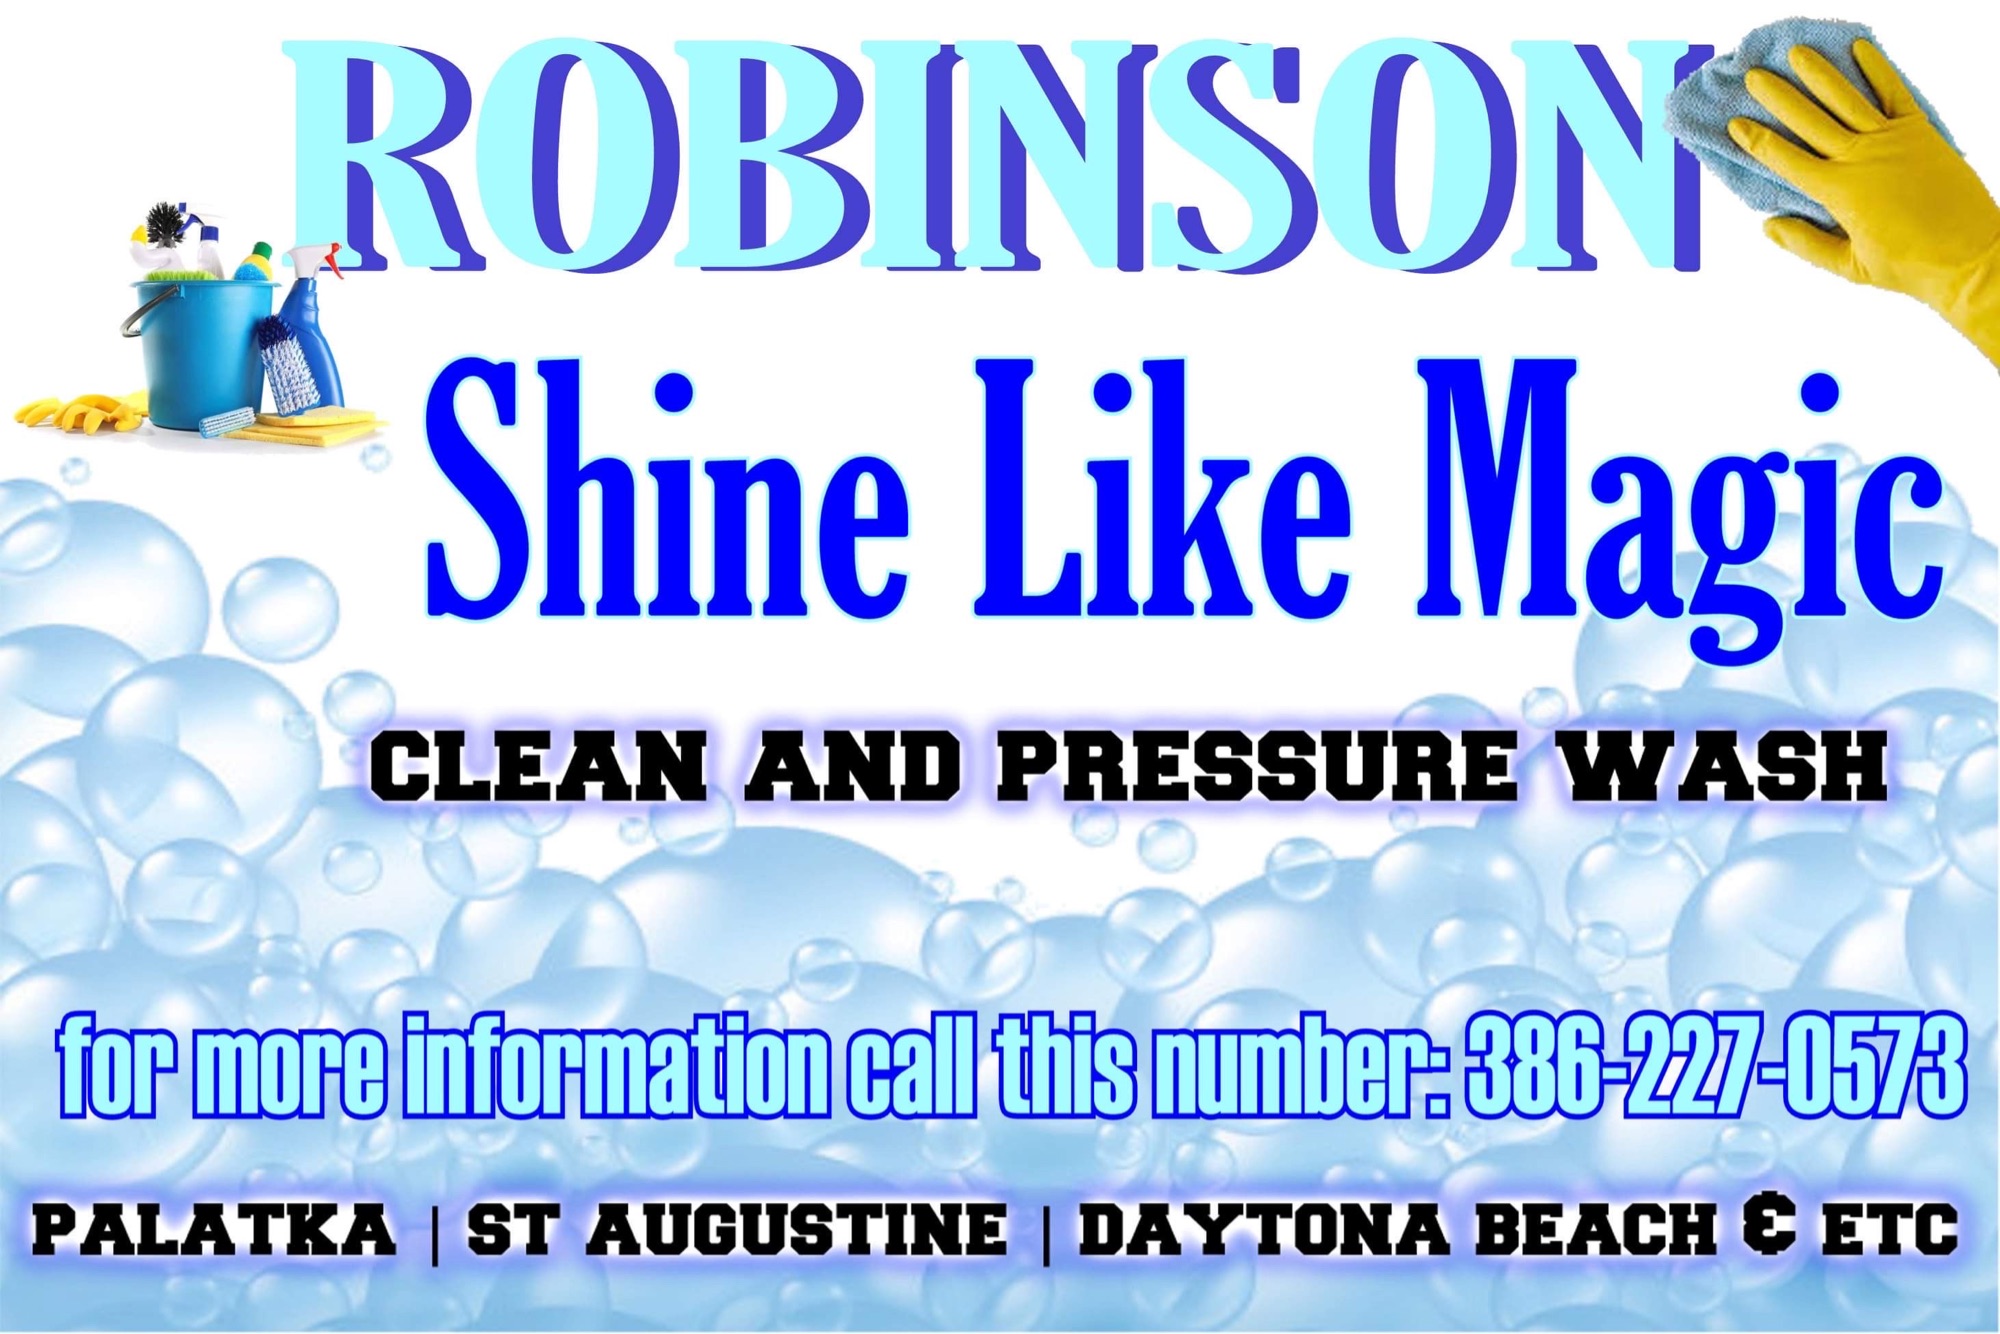 Robinson Shines Logo